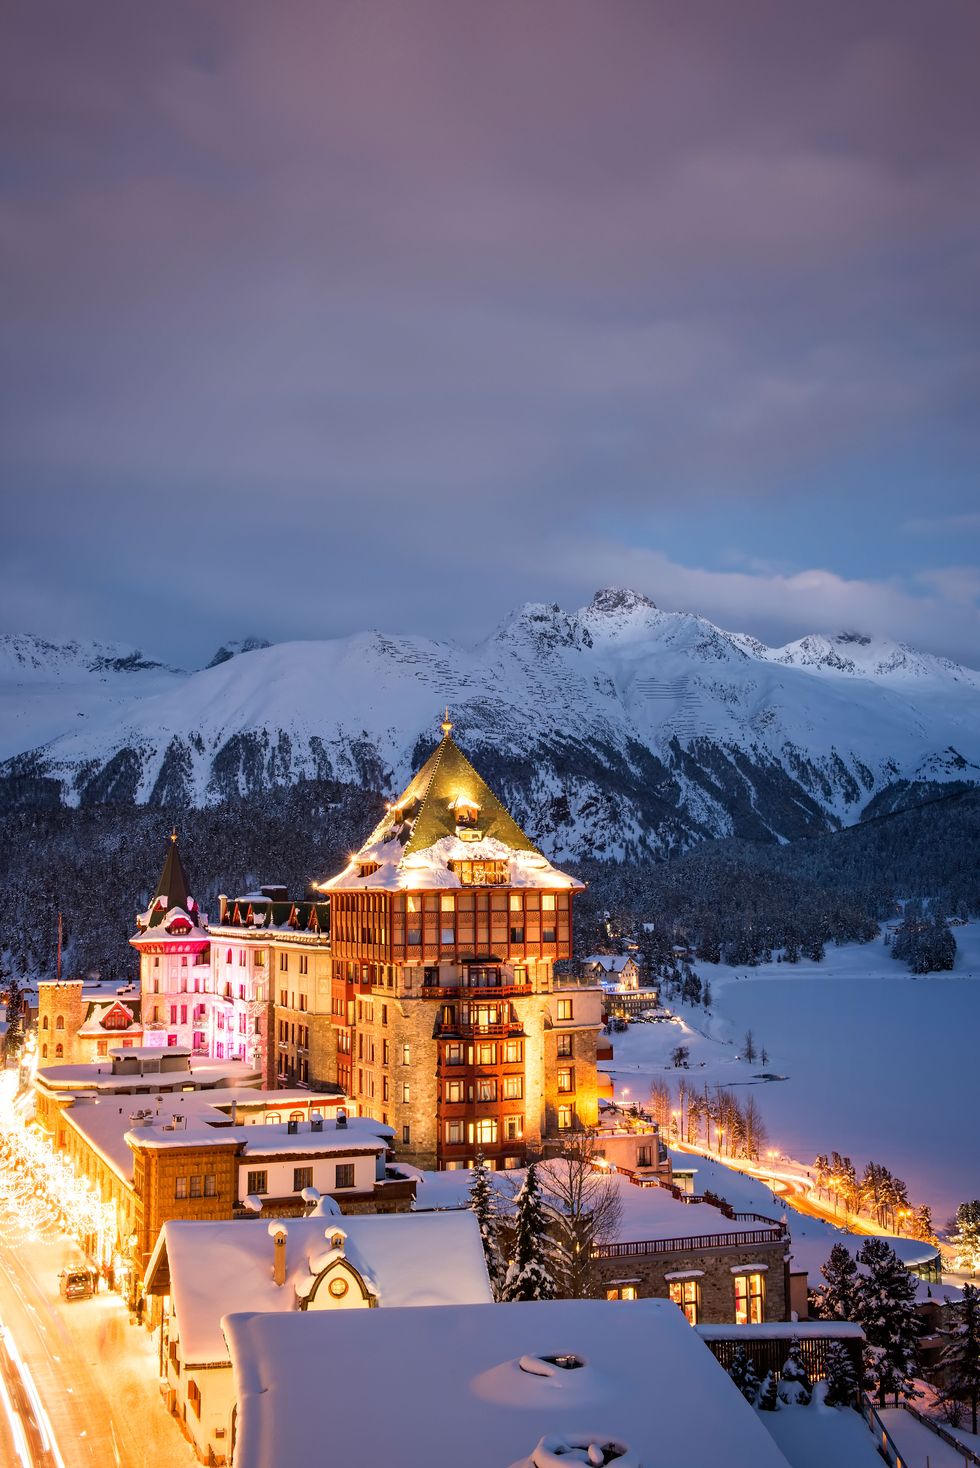 What to Do in St. Moritz January 2019 - St. Moritz Travel Guide